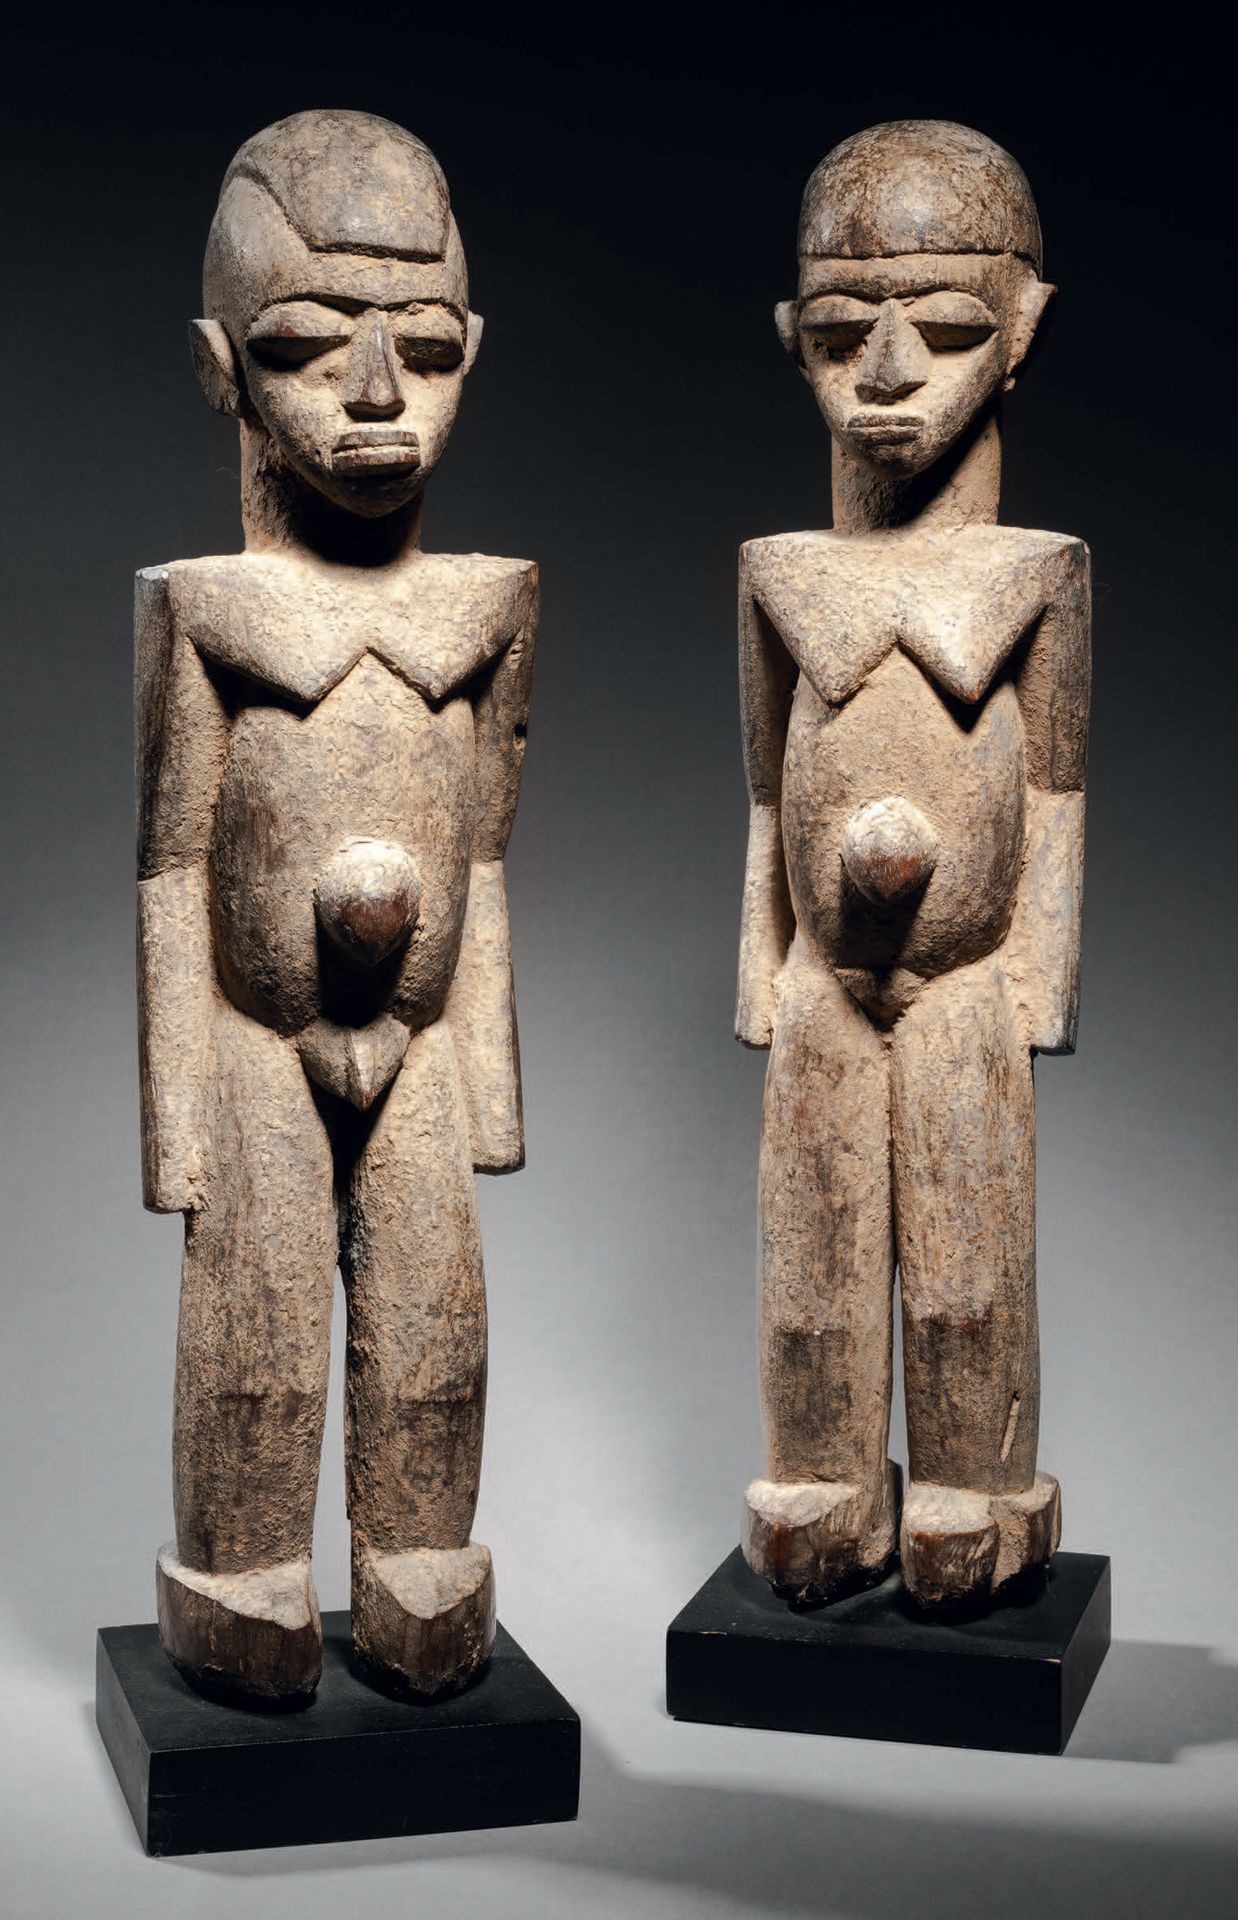 Null Couple of Lobi statues, Ivory Coast
Wood and slightly crusty patina
H. 44 c&hellip;